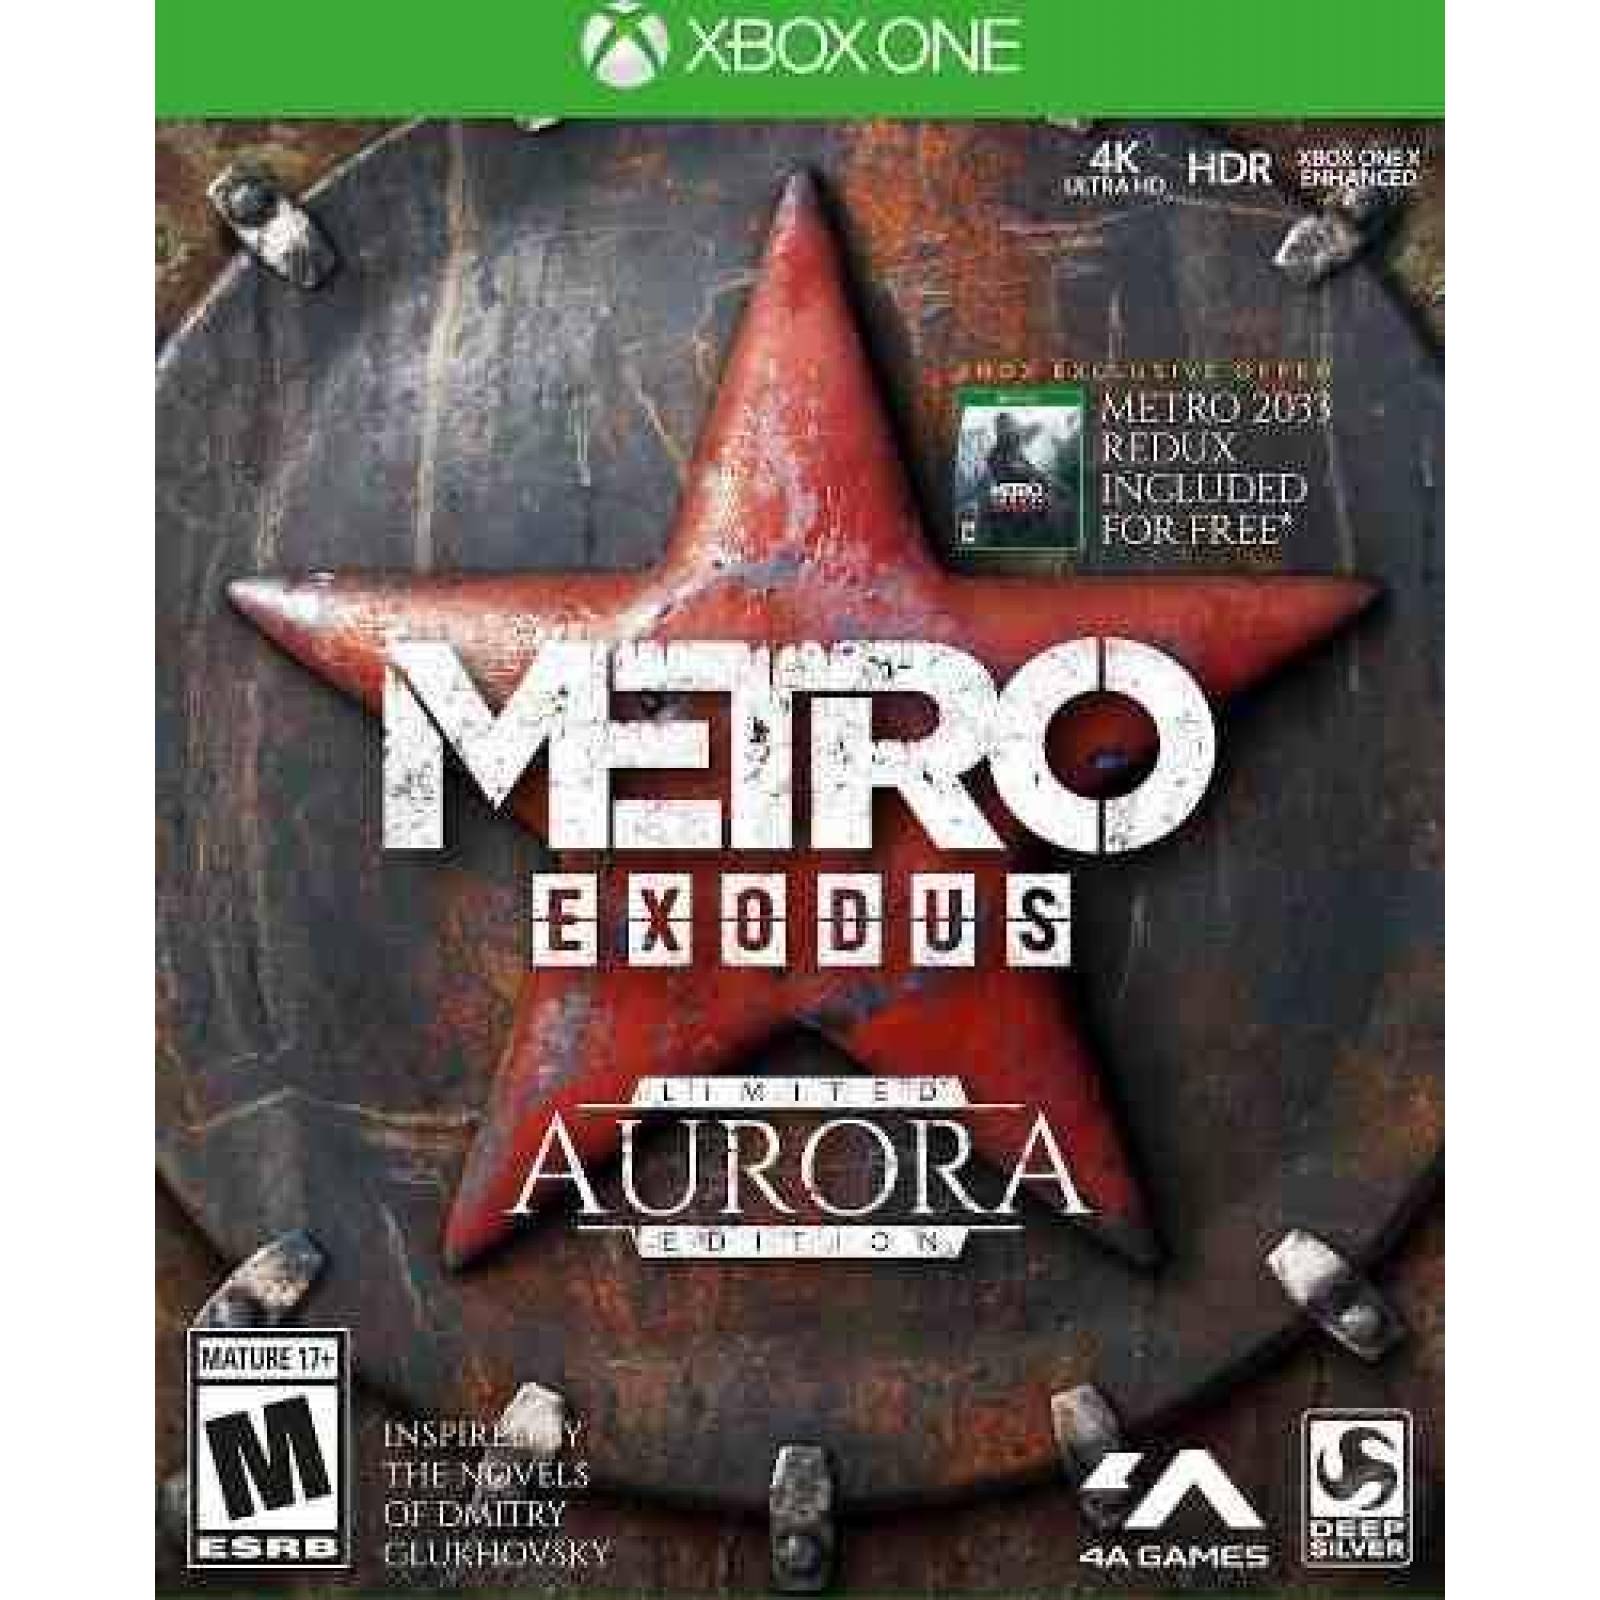 METRO EXODUS AURORA Limited Edition Xbox One S001 